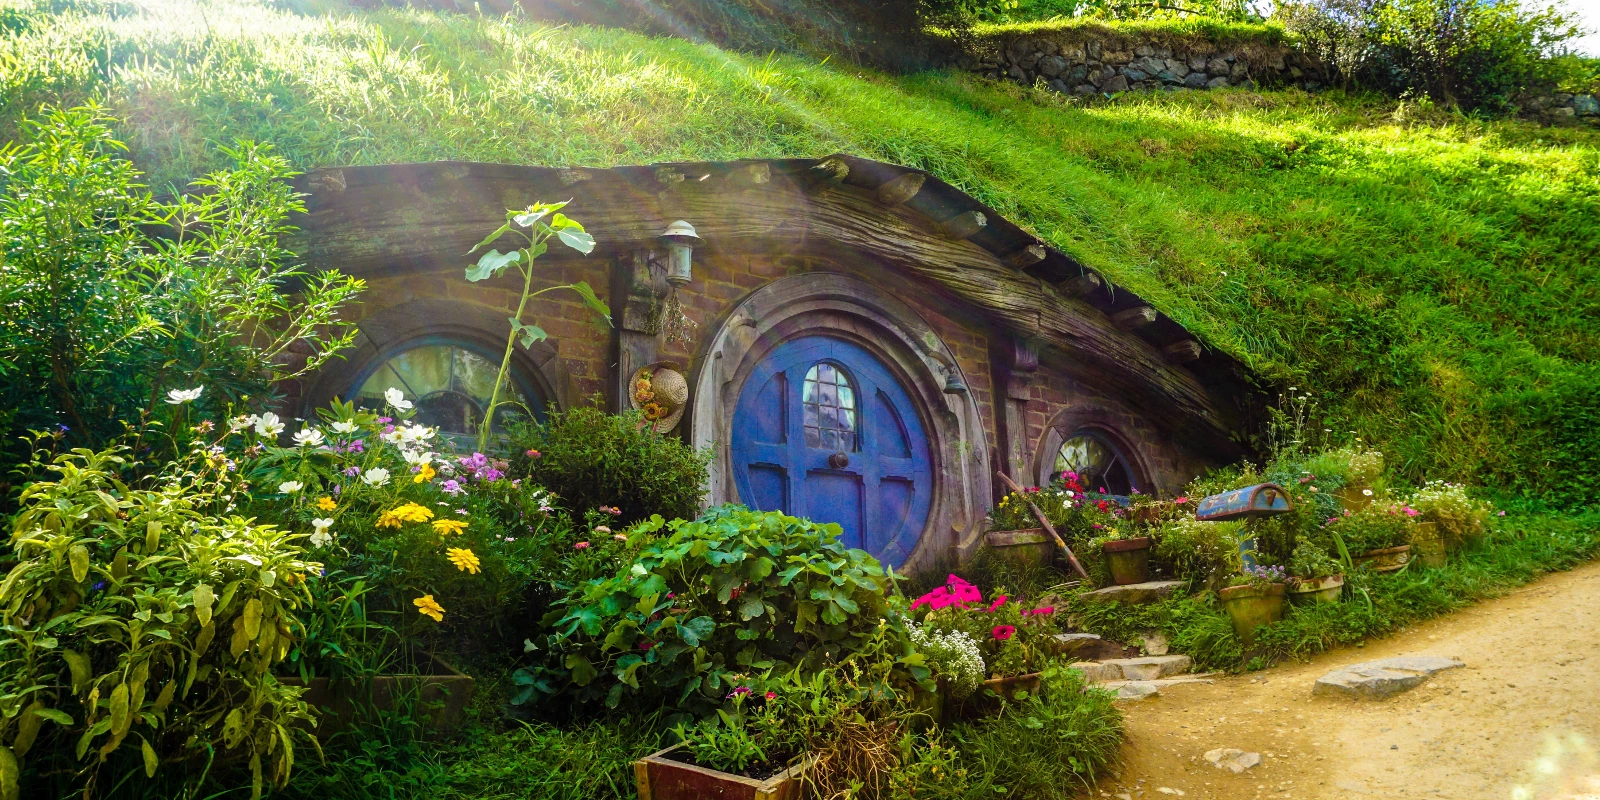 Middle-earth News – It's Tolkien Week!